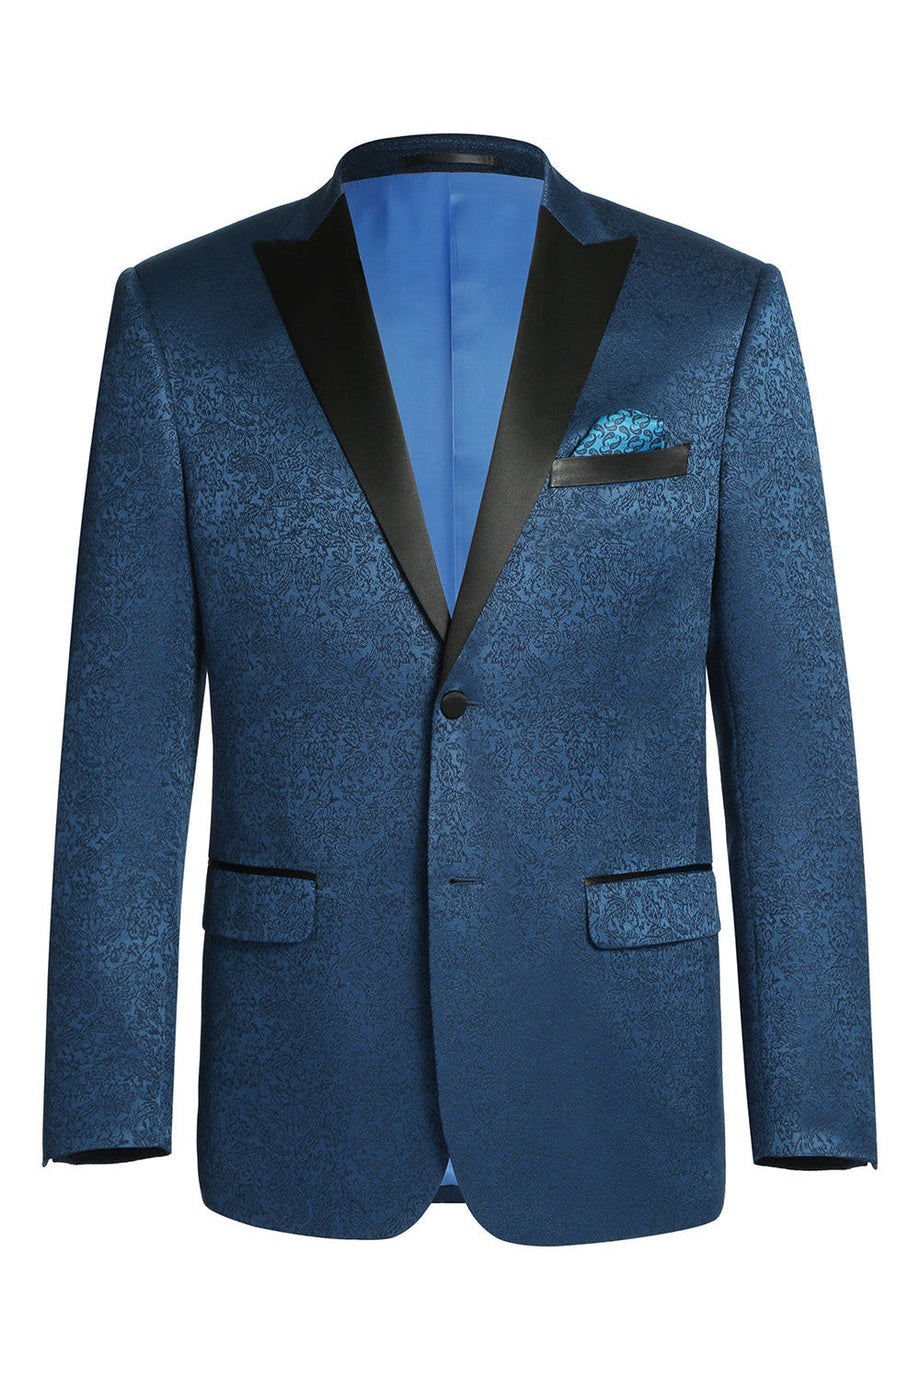 RN Collection "Hugo" Dark Blue Tuxedo Jacket (Separates)